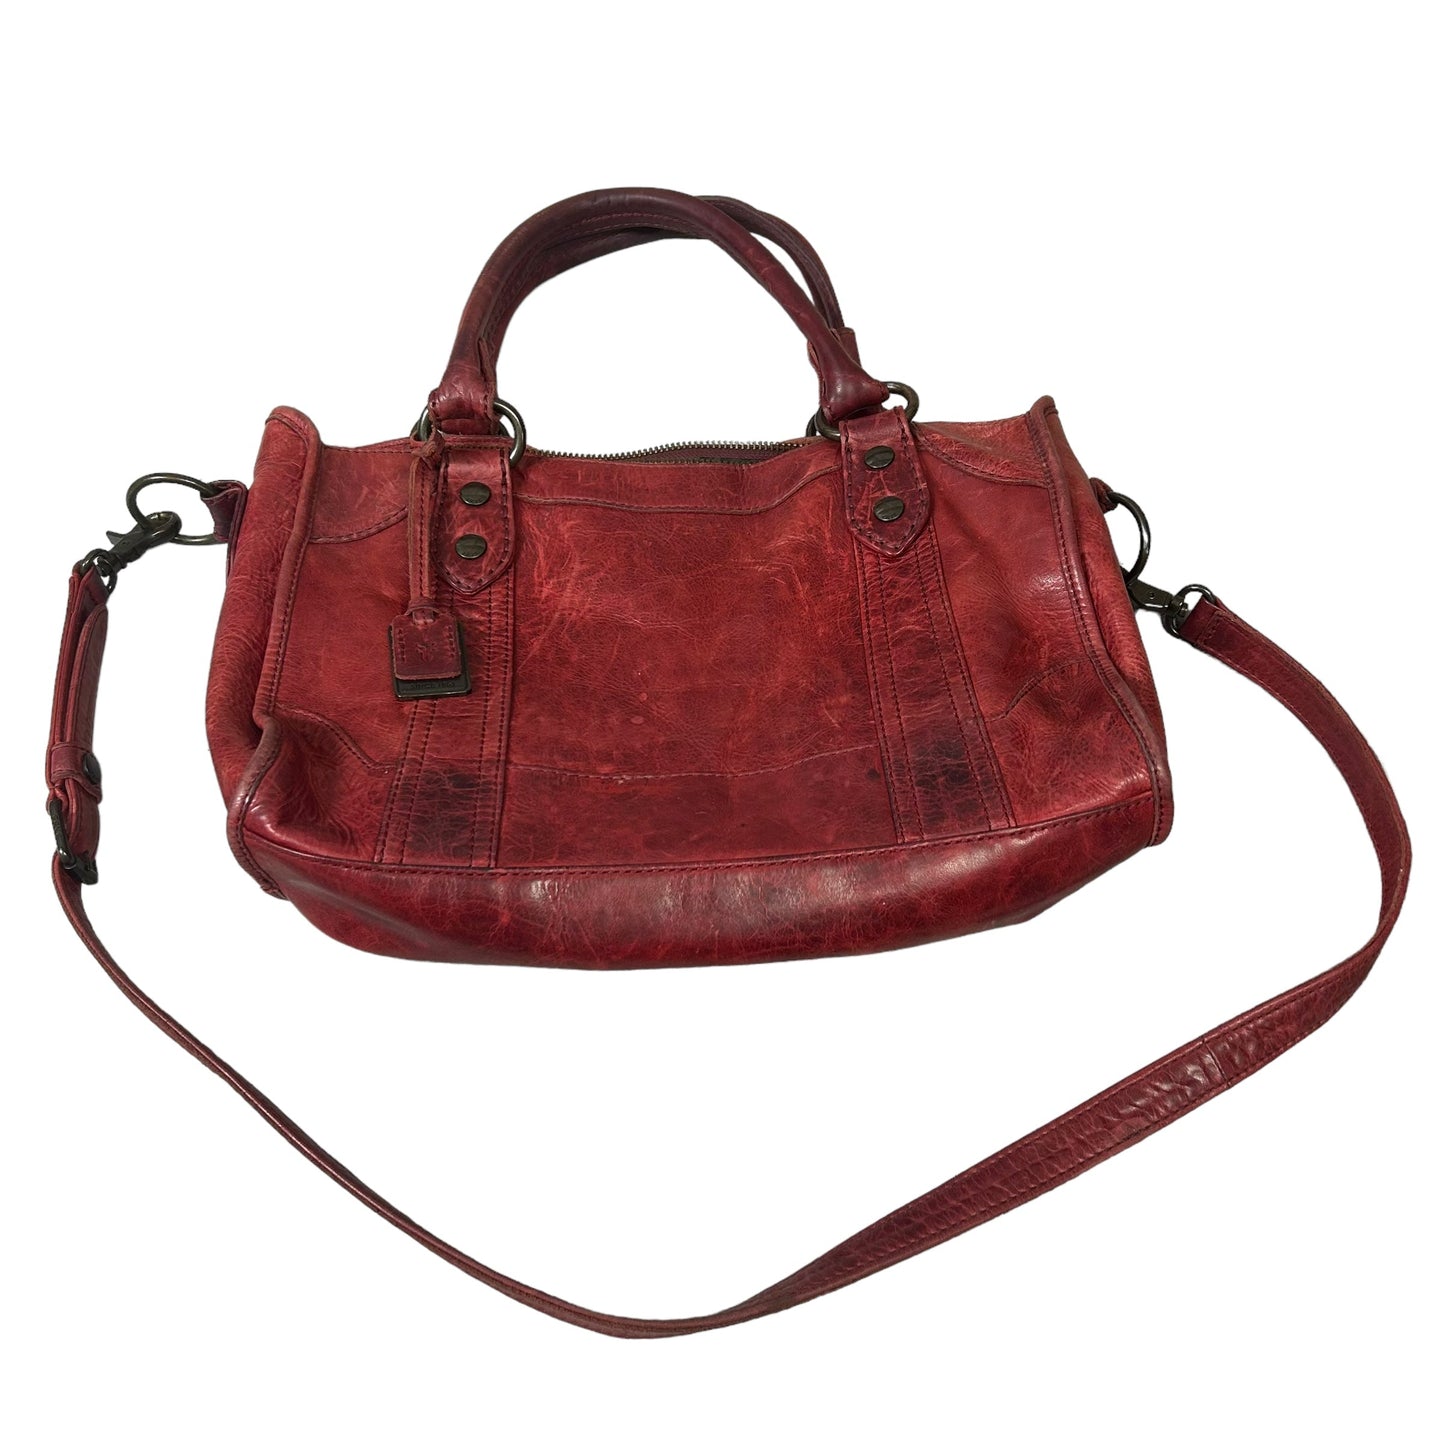 Handbag Leather Frye, Size Medium